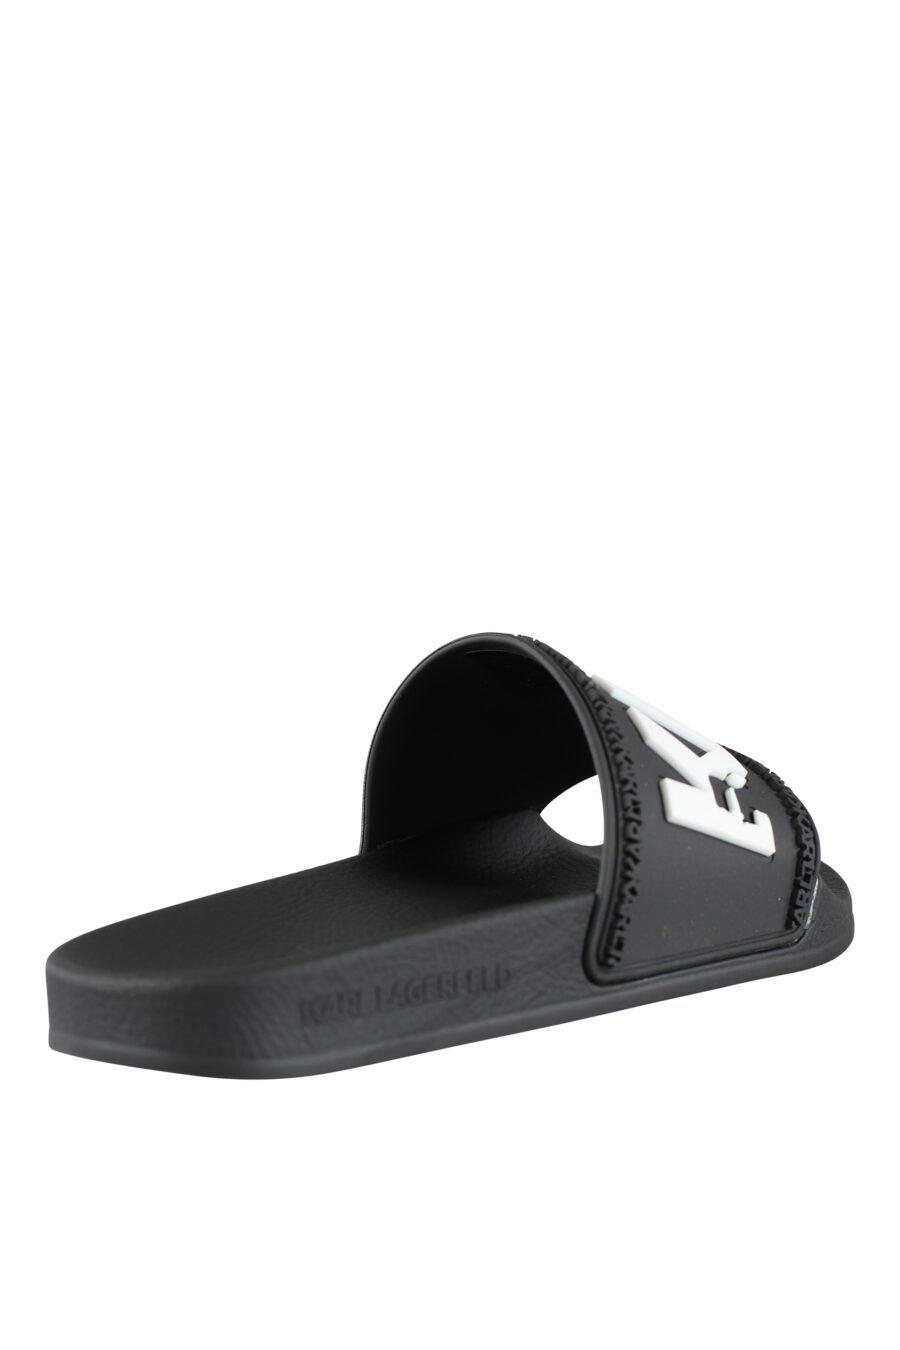 Black rubber flip flops with white maxilogo - IMG 9586